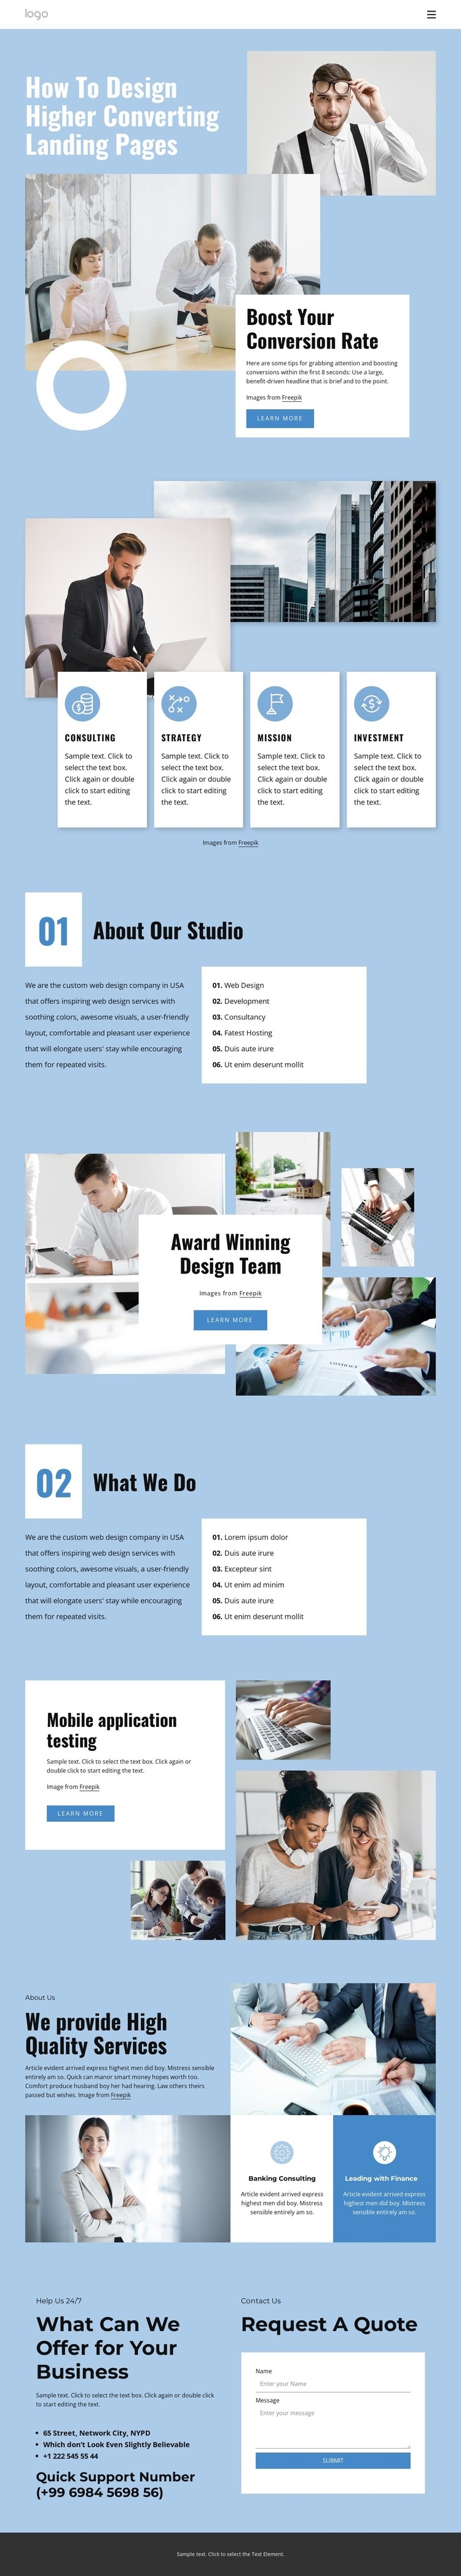 Digital marketing studio Web Page Design